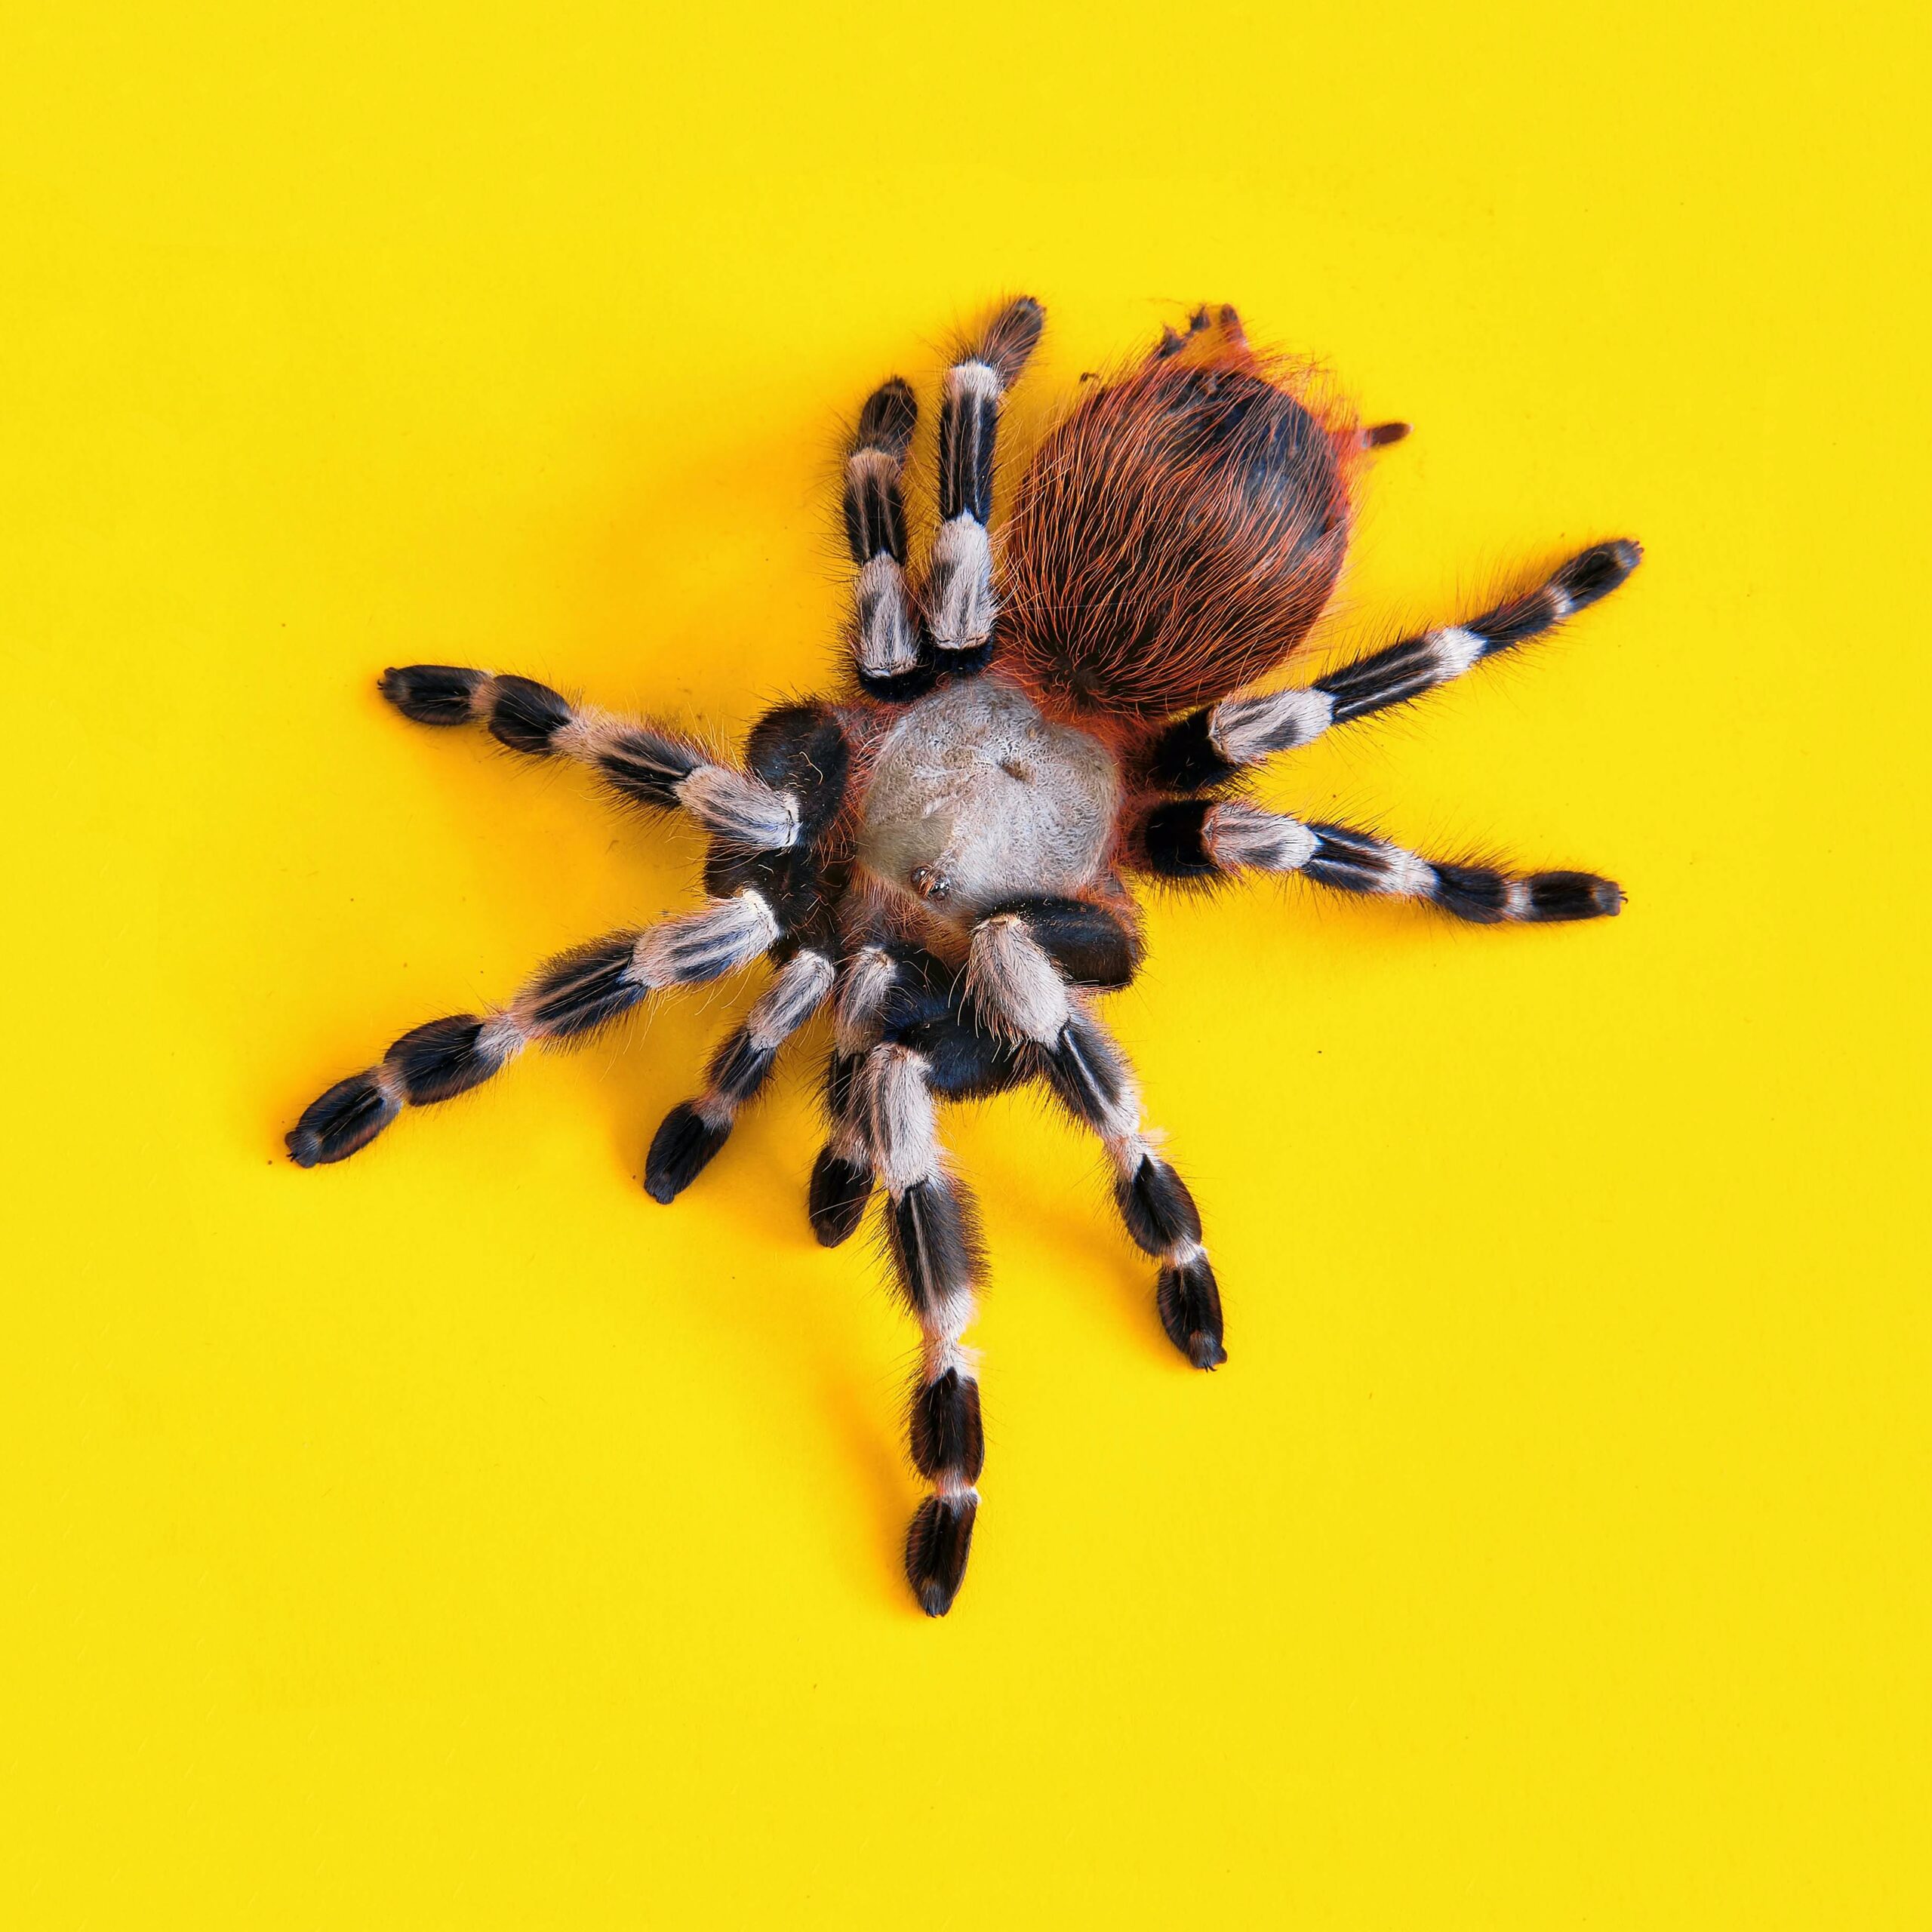 brown and black tarantula on yellow surface